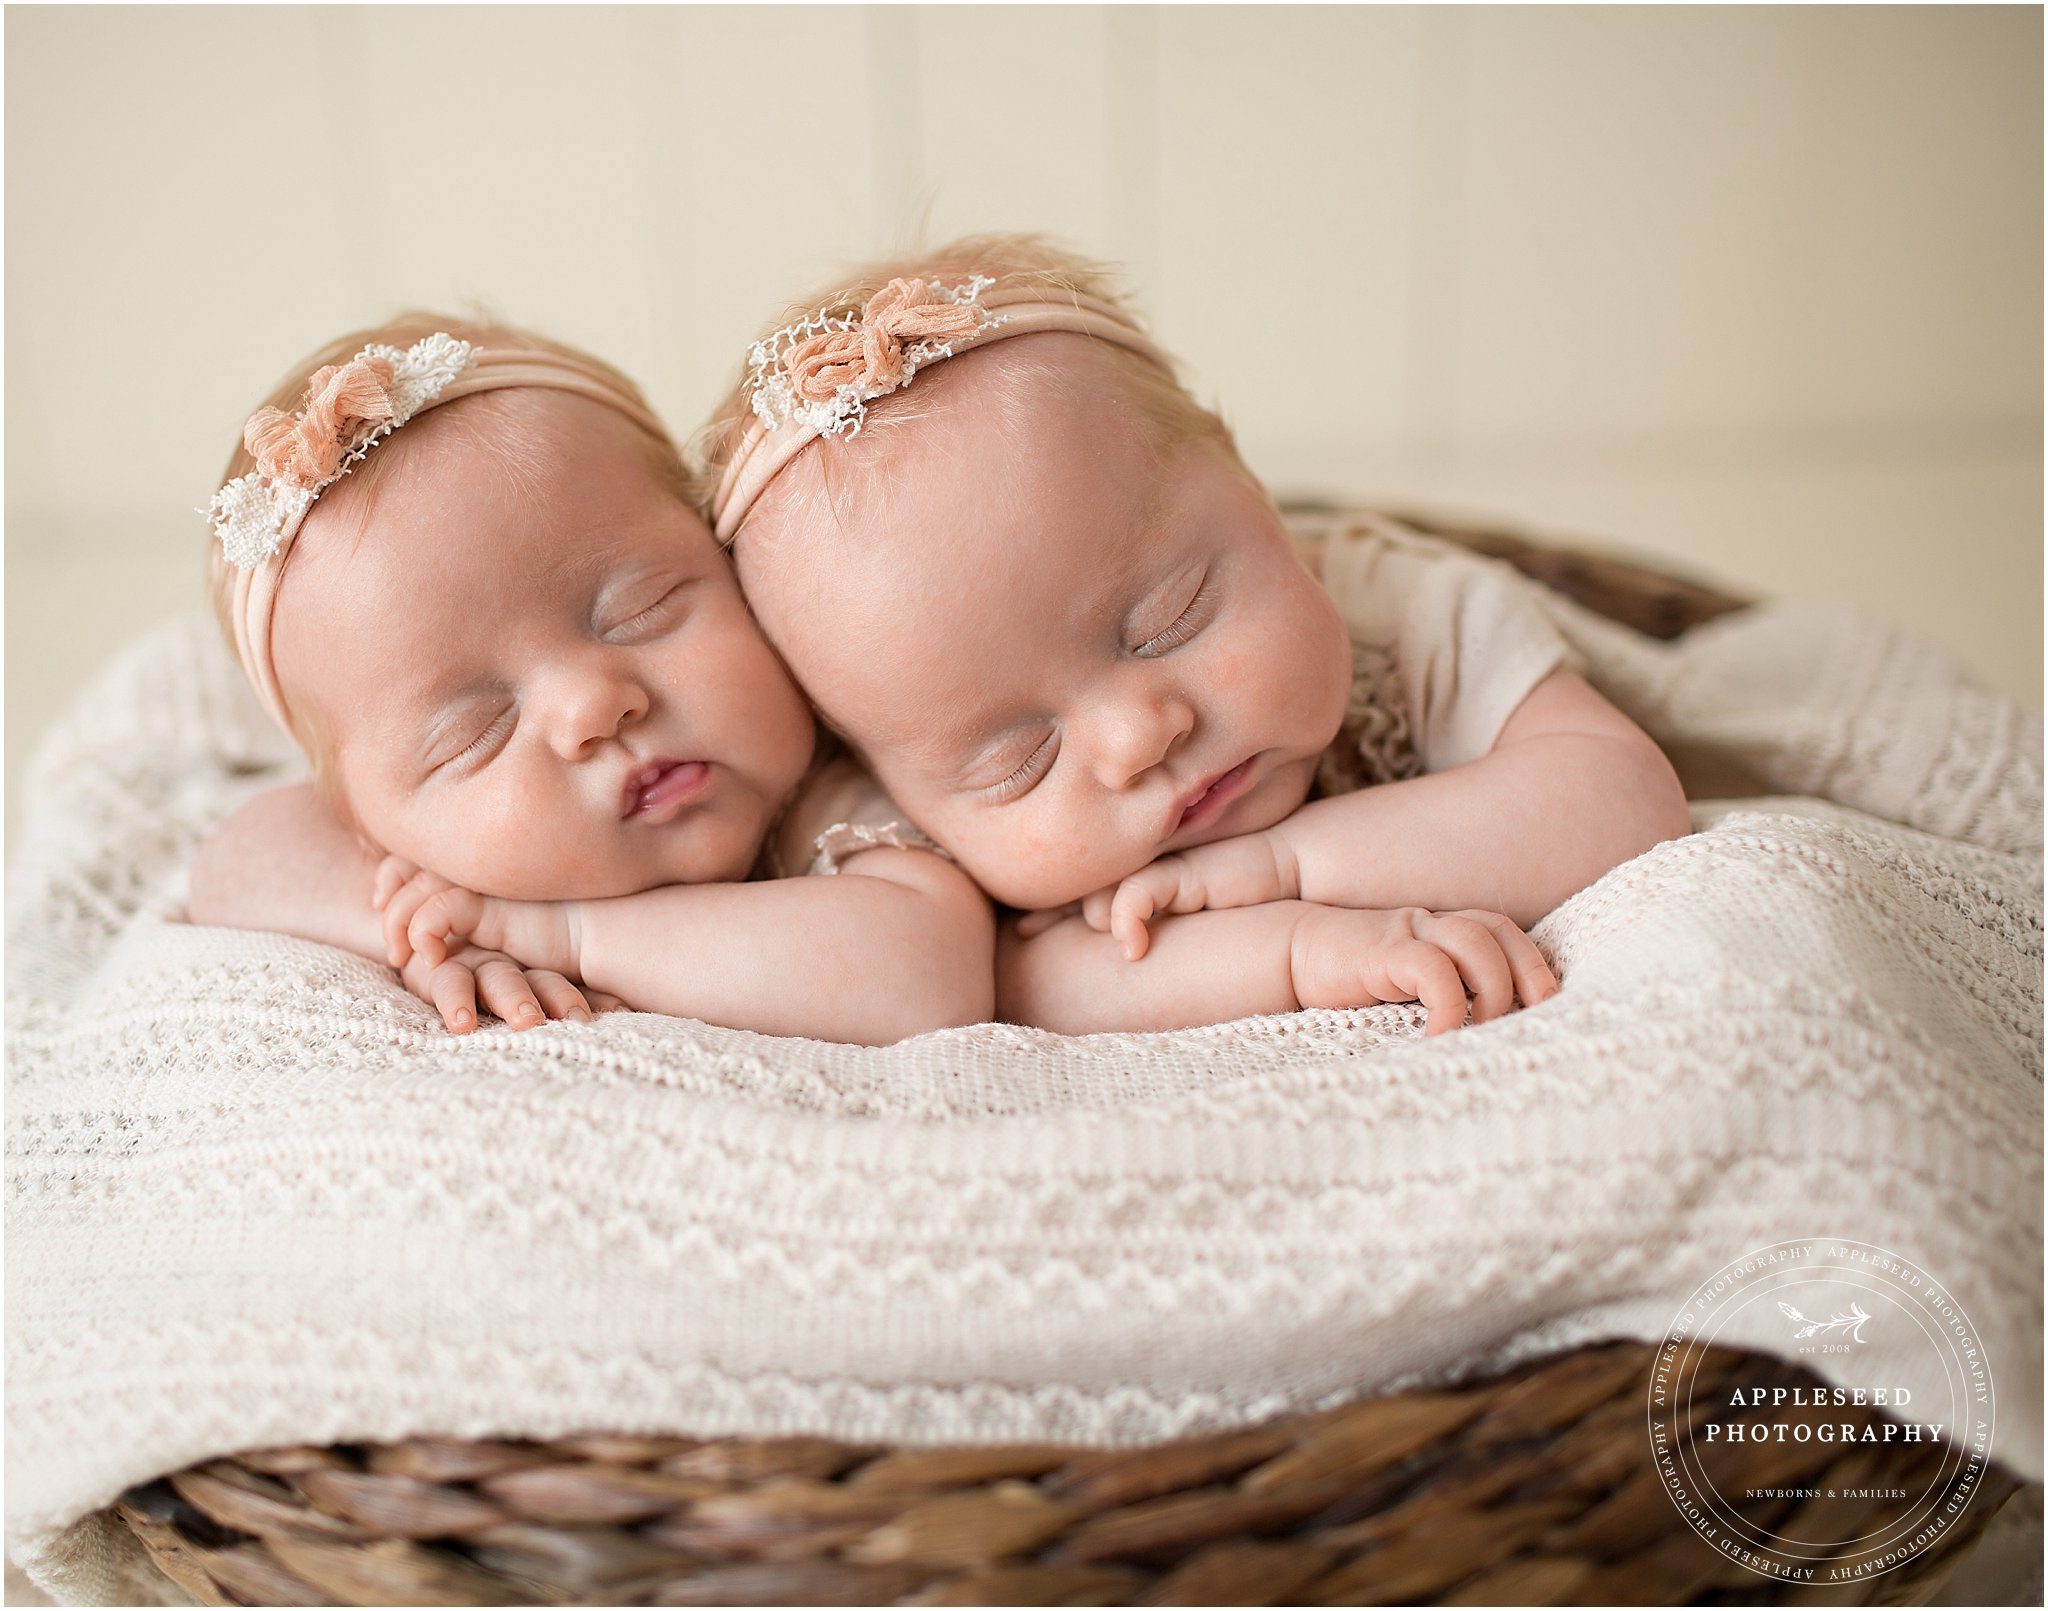 Avery and Caroline | Atlanta Twin Photographer | Appleseed Photography